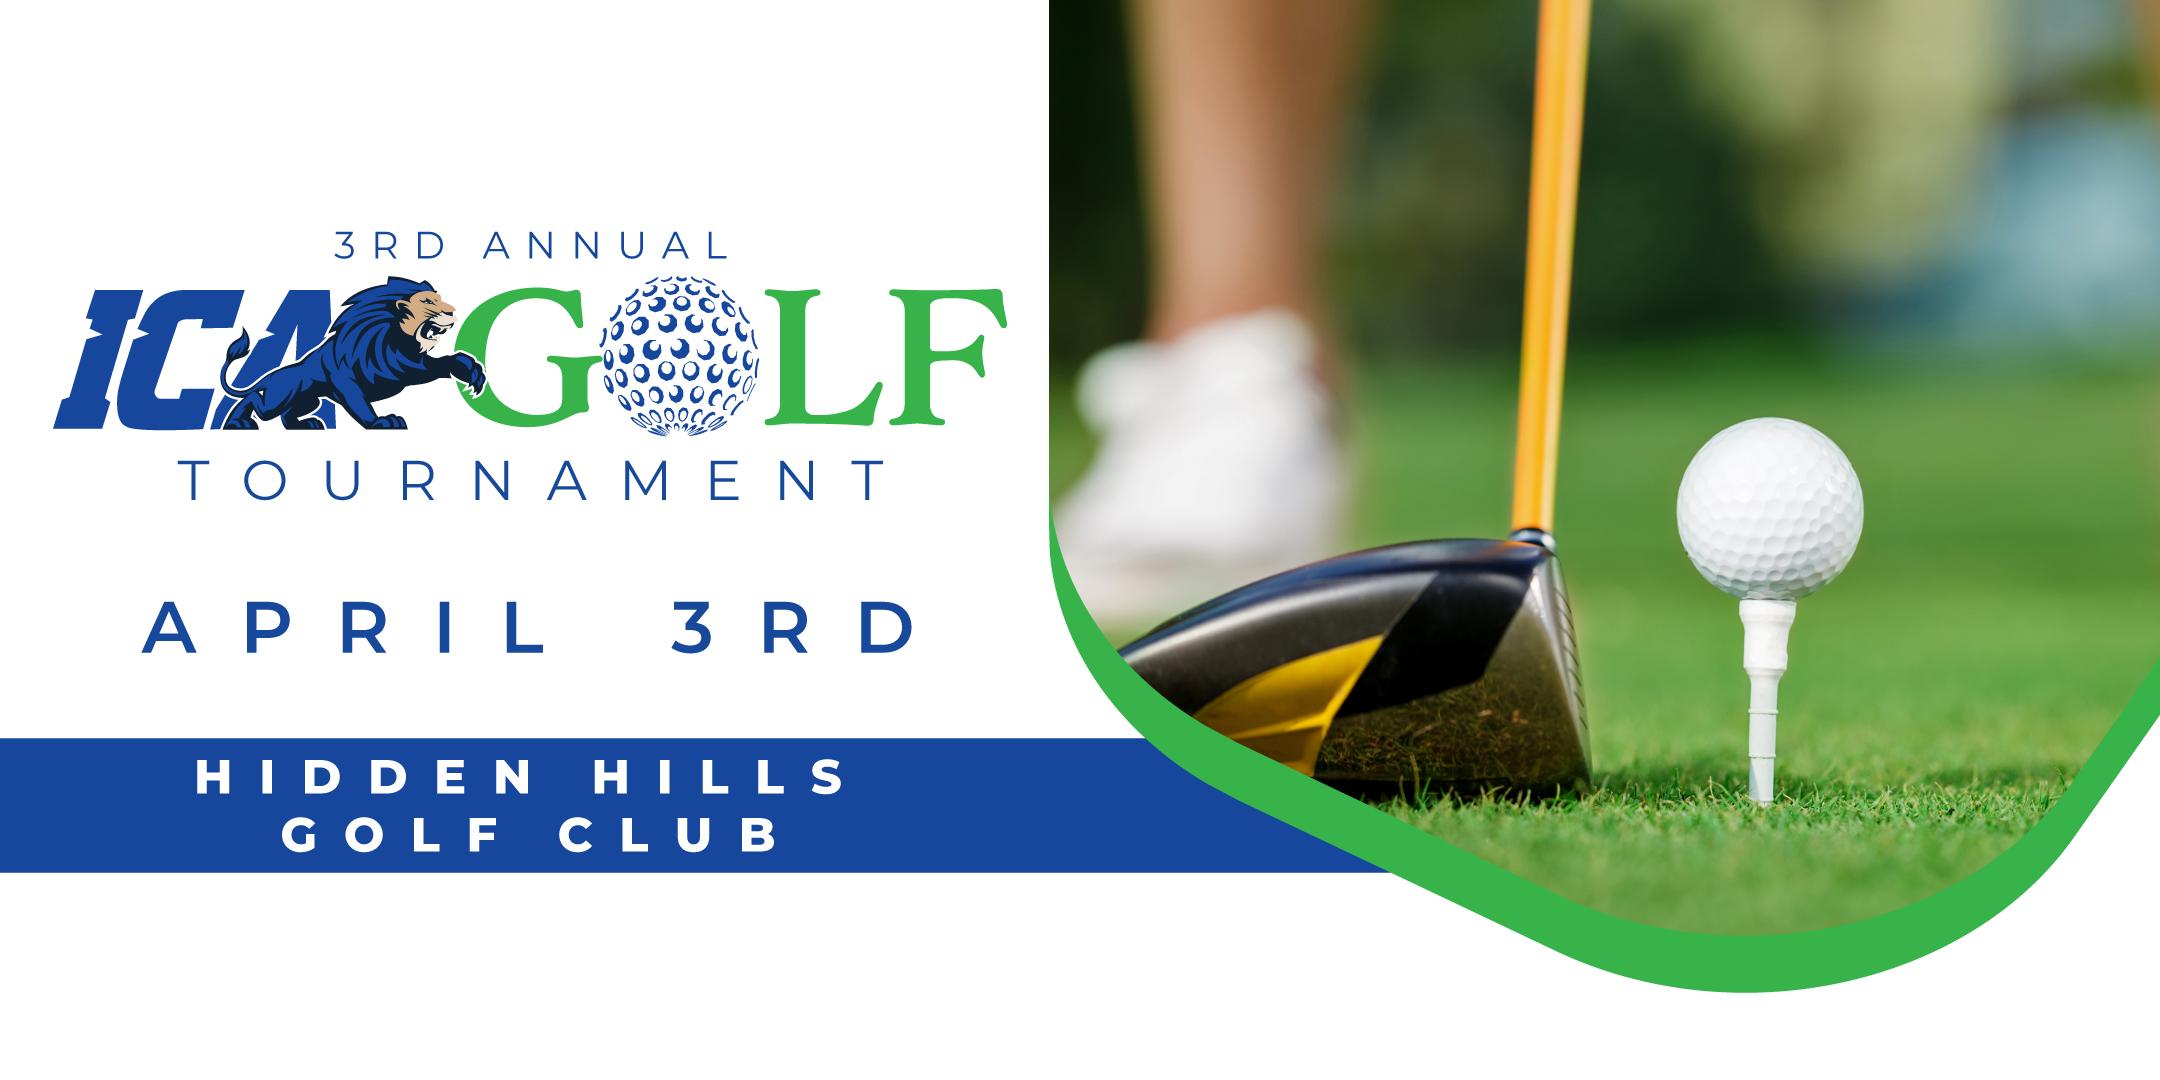 3rd Annual ICA Golf Tournament